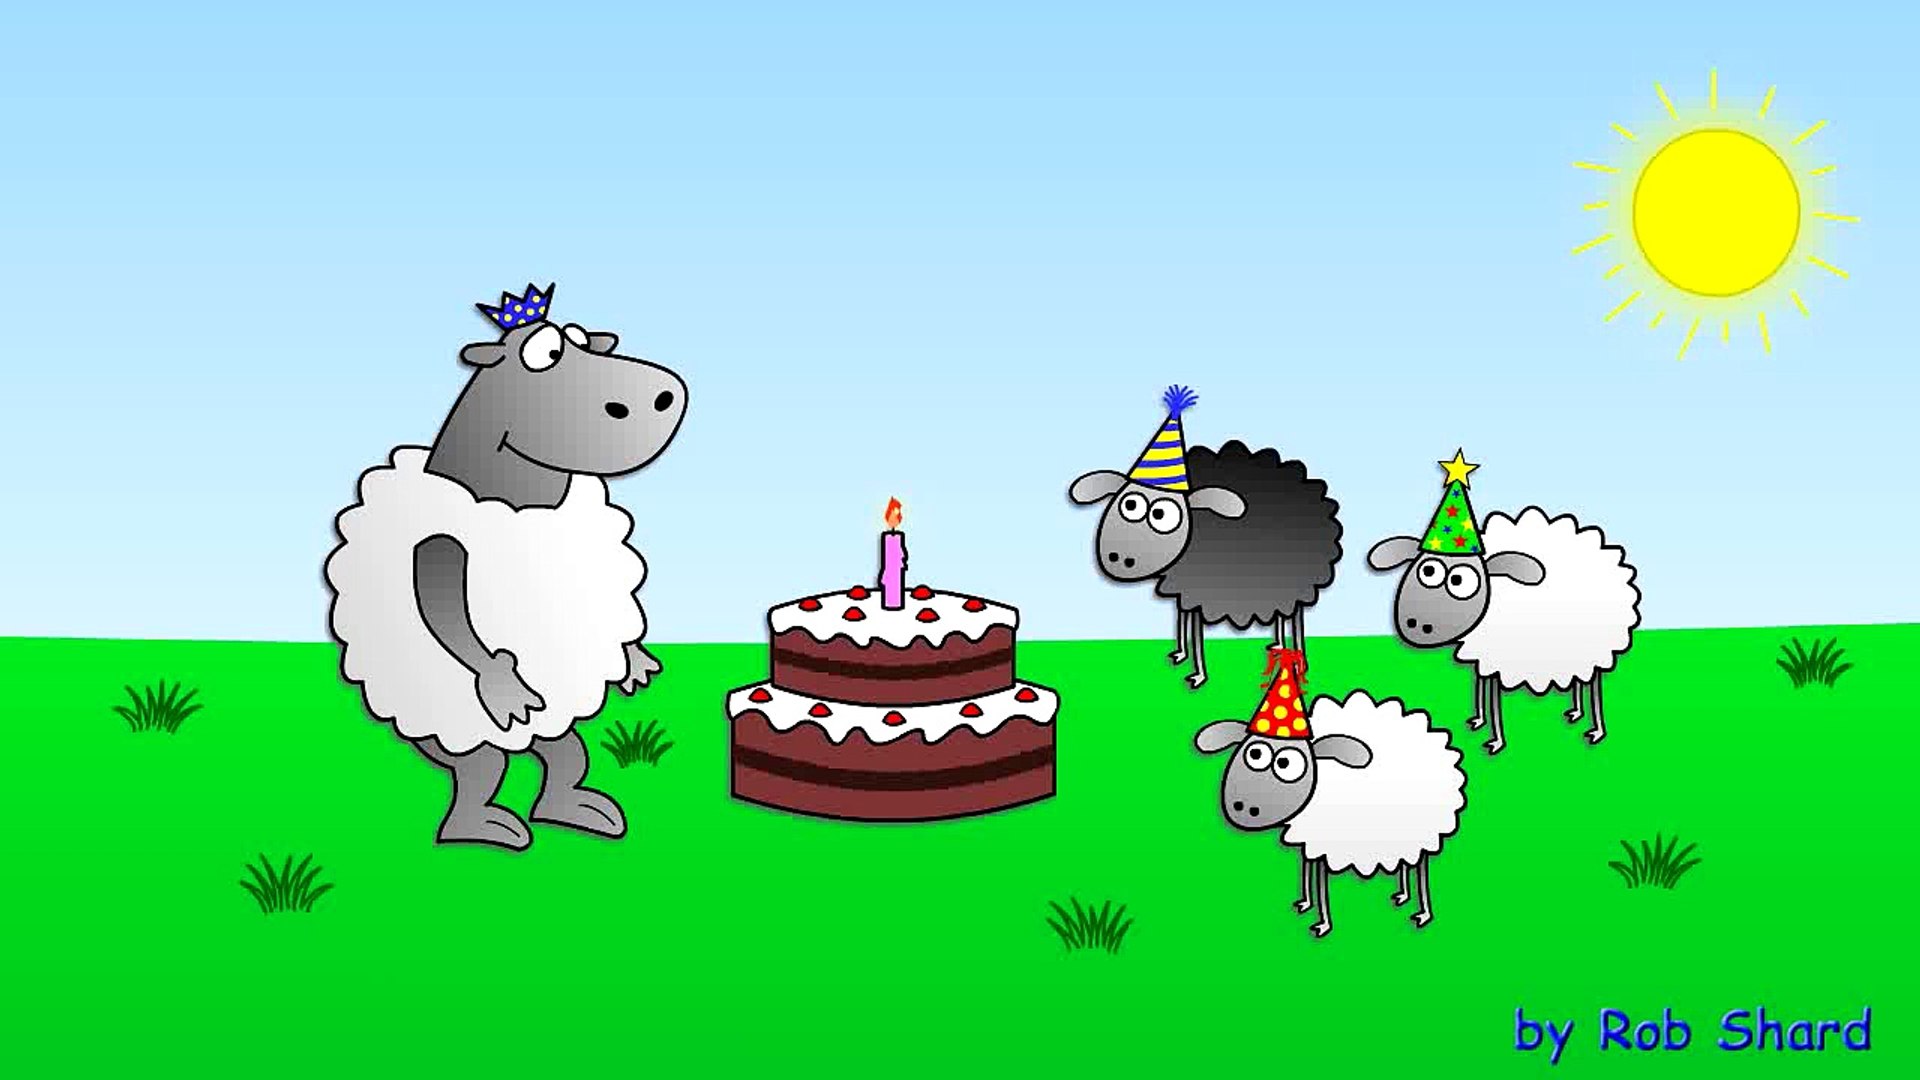 Happy Birthday funny animated sheep cartoon Happy Birthday song with cake  !! - video Dailymotion